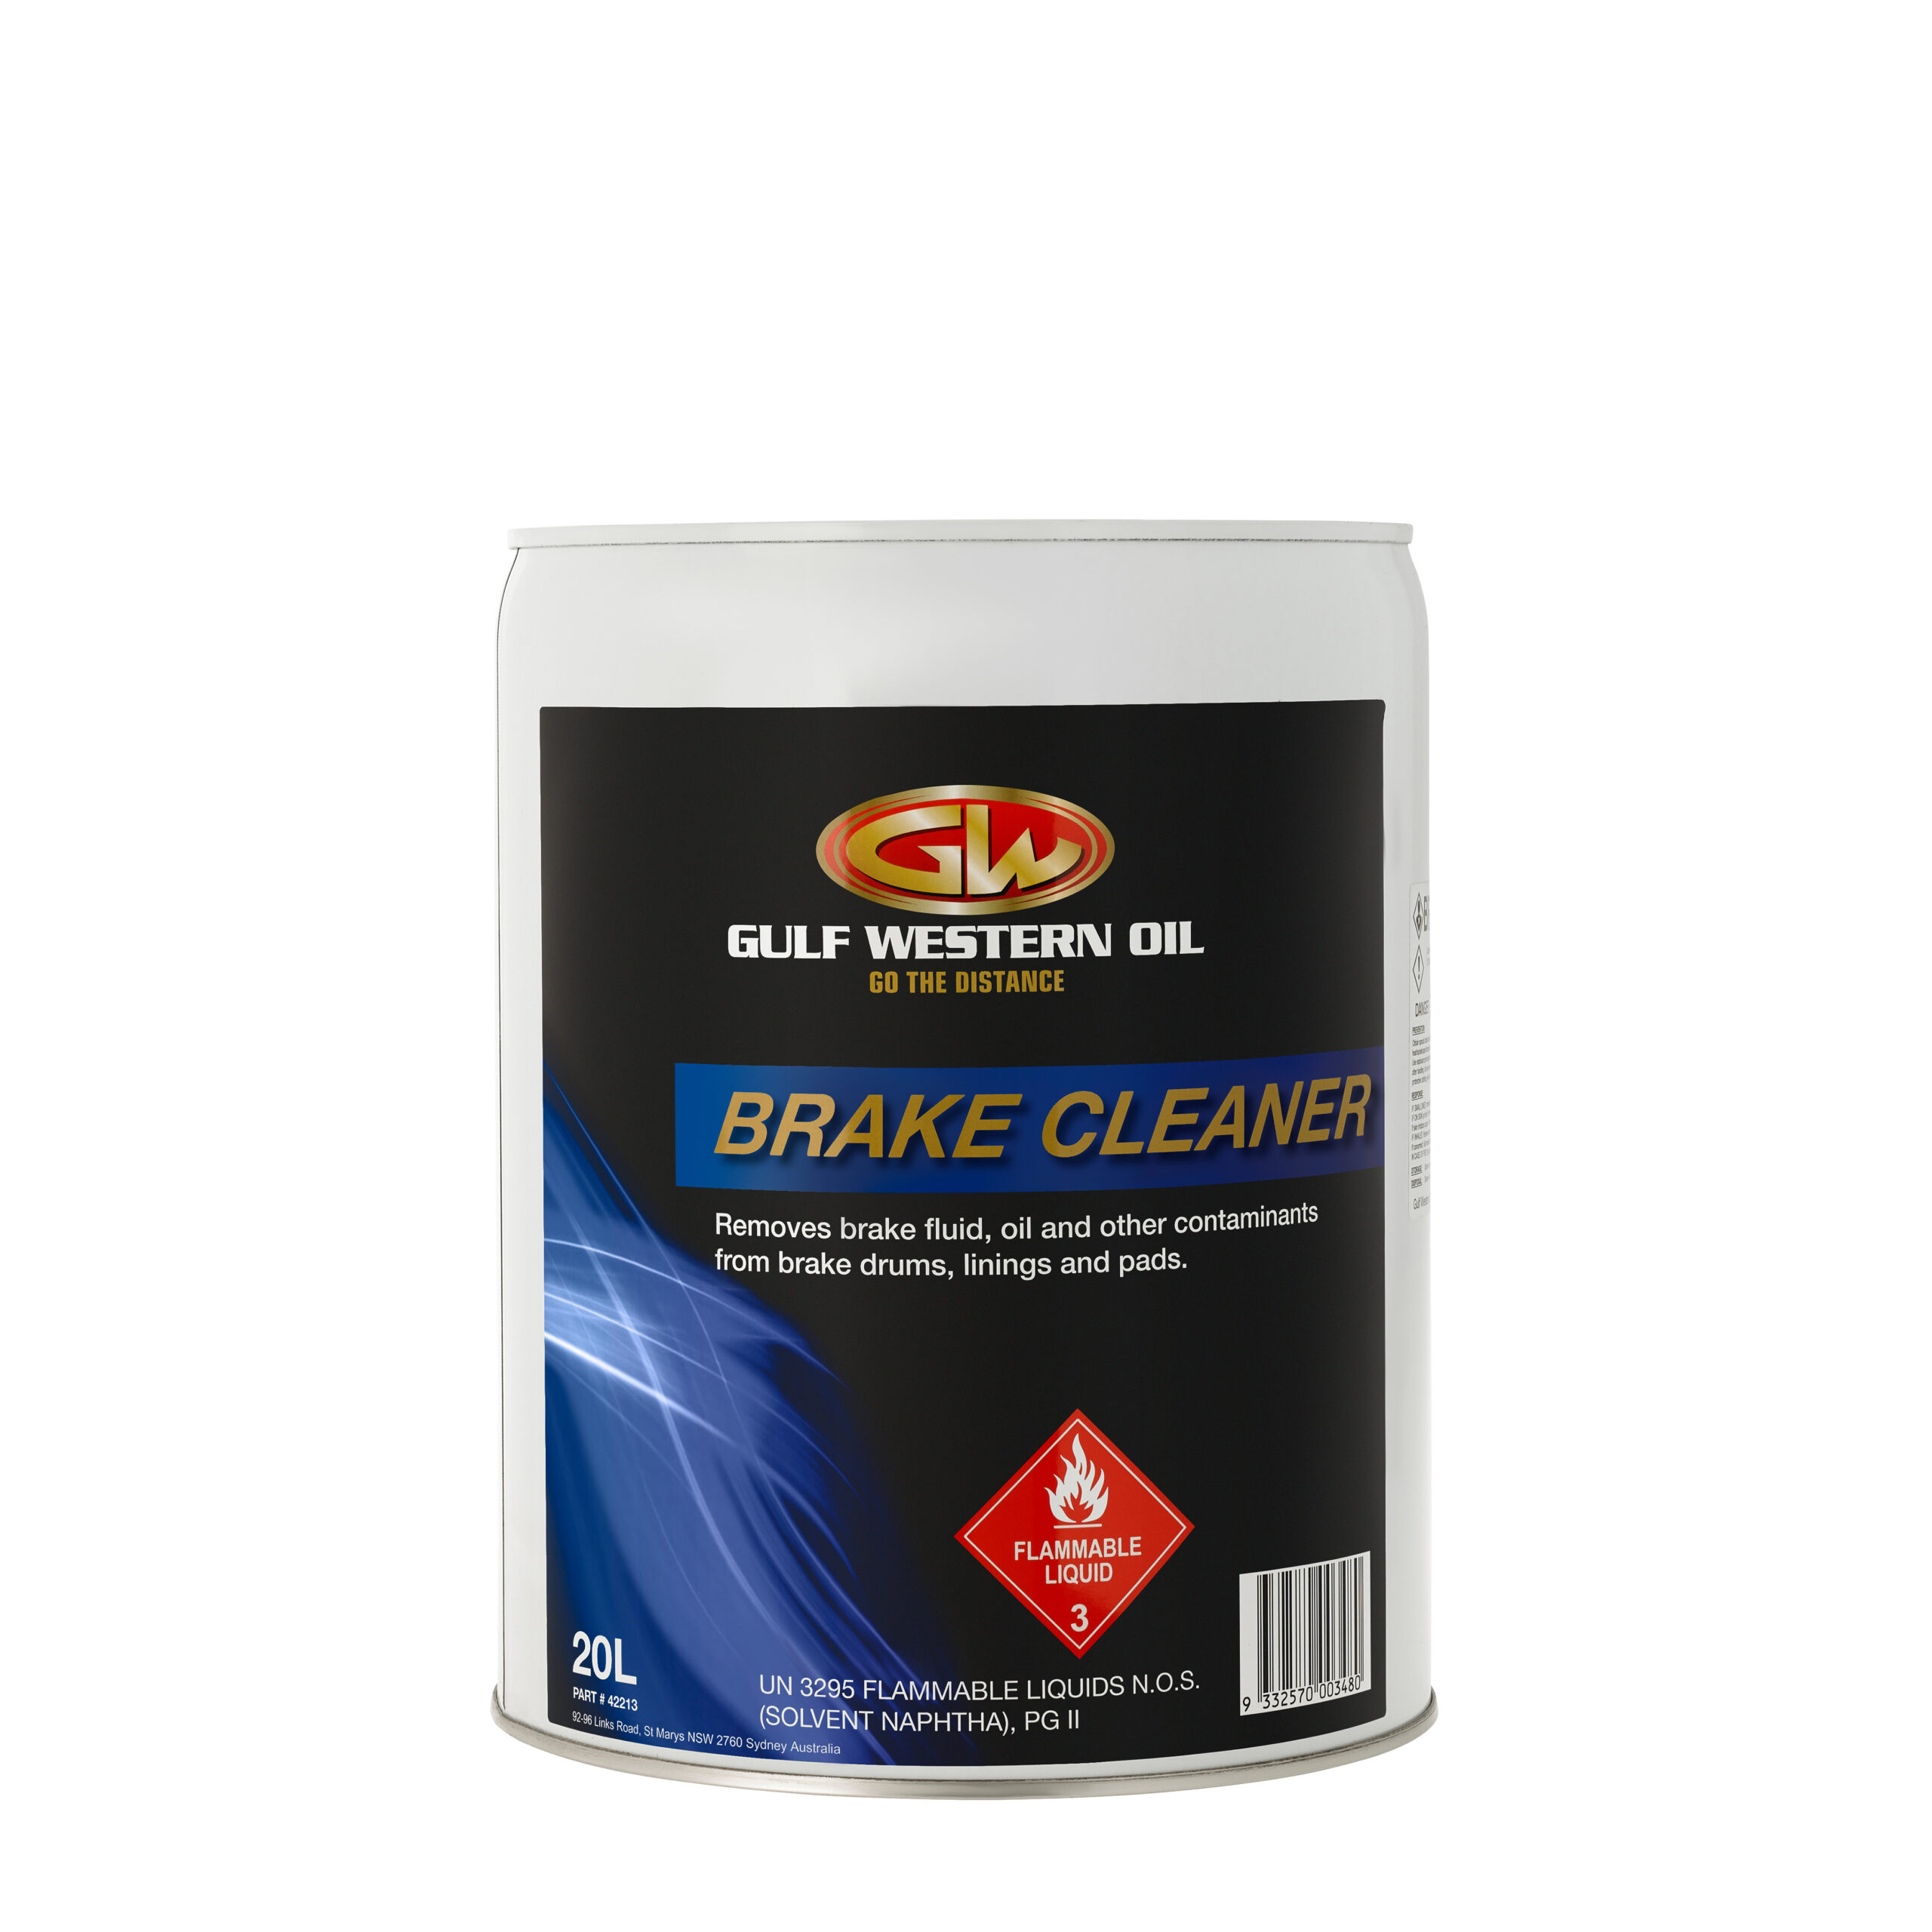 Eurol Brake Cleaner Spray – eurol.pk